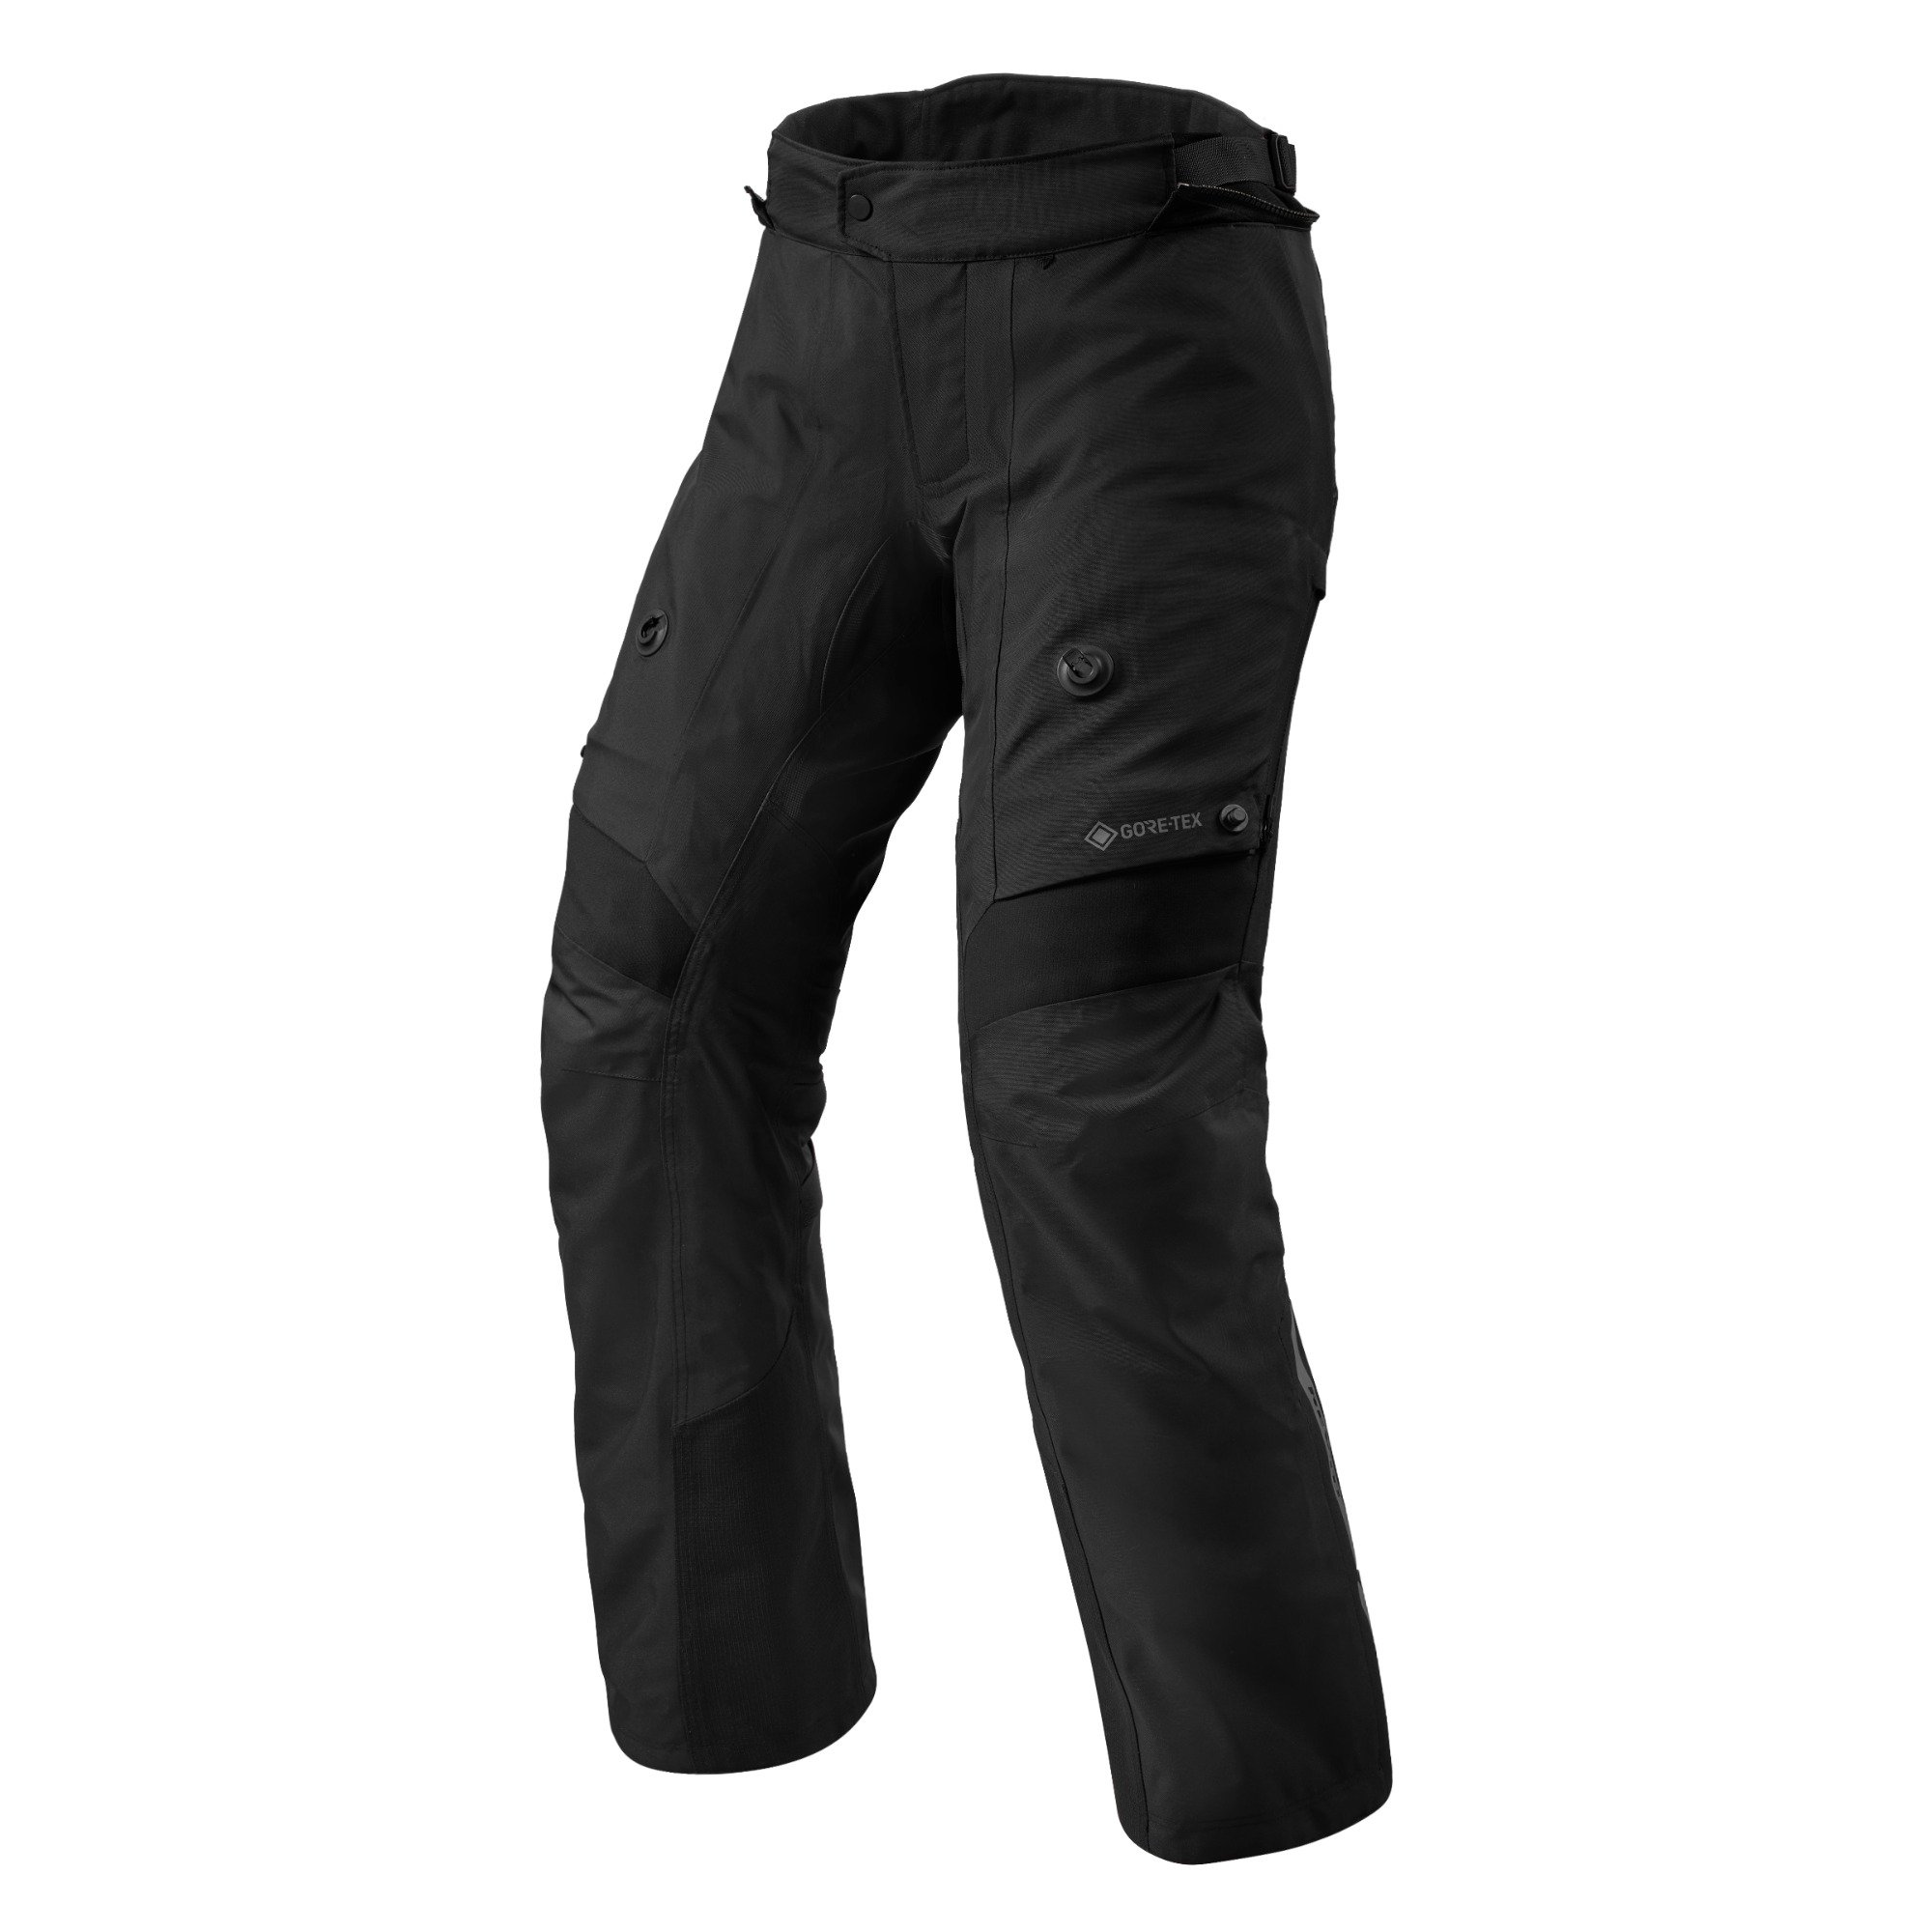 Image of REV'IT! Pants Poseidon 3 GTX Black Short Motorcycle Pants Size M EN